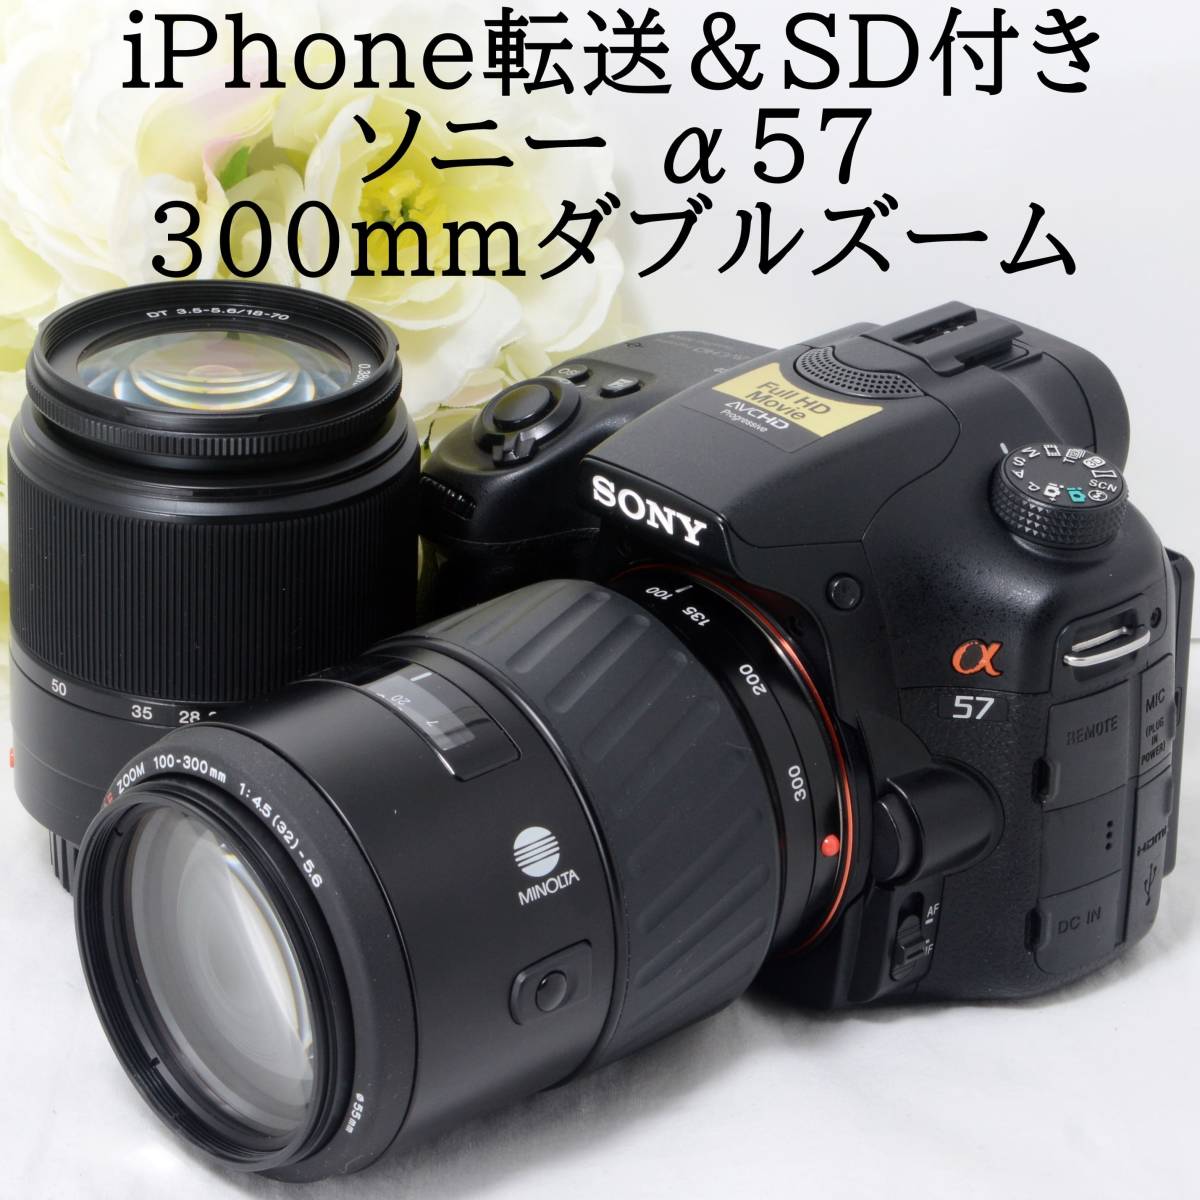 76%OFF!】 SONY ソニー Cyber-Shot DSC-T100 デジタルカメラ